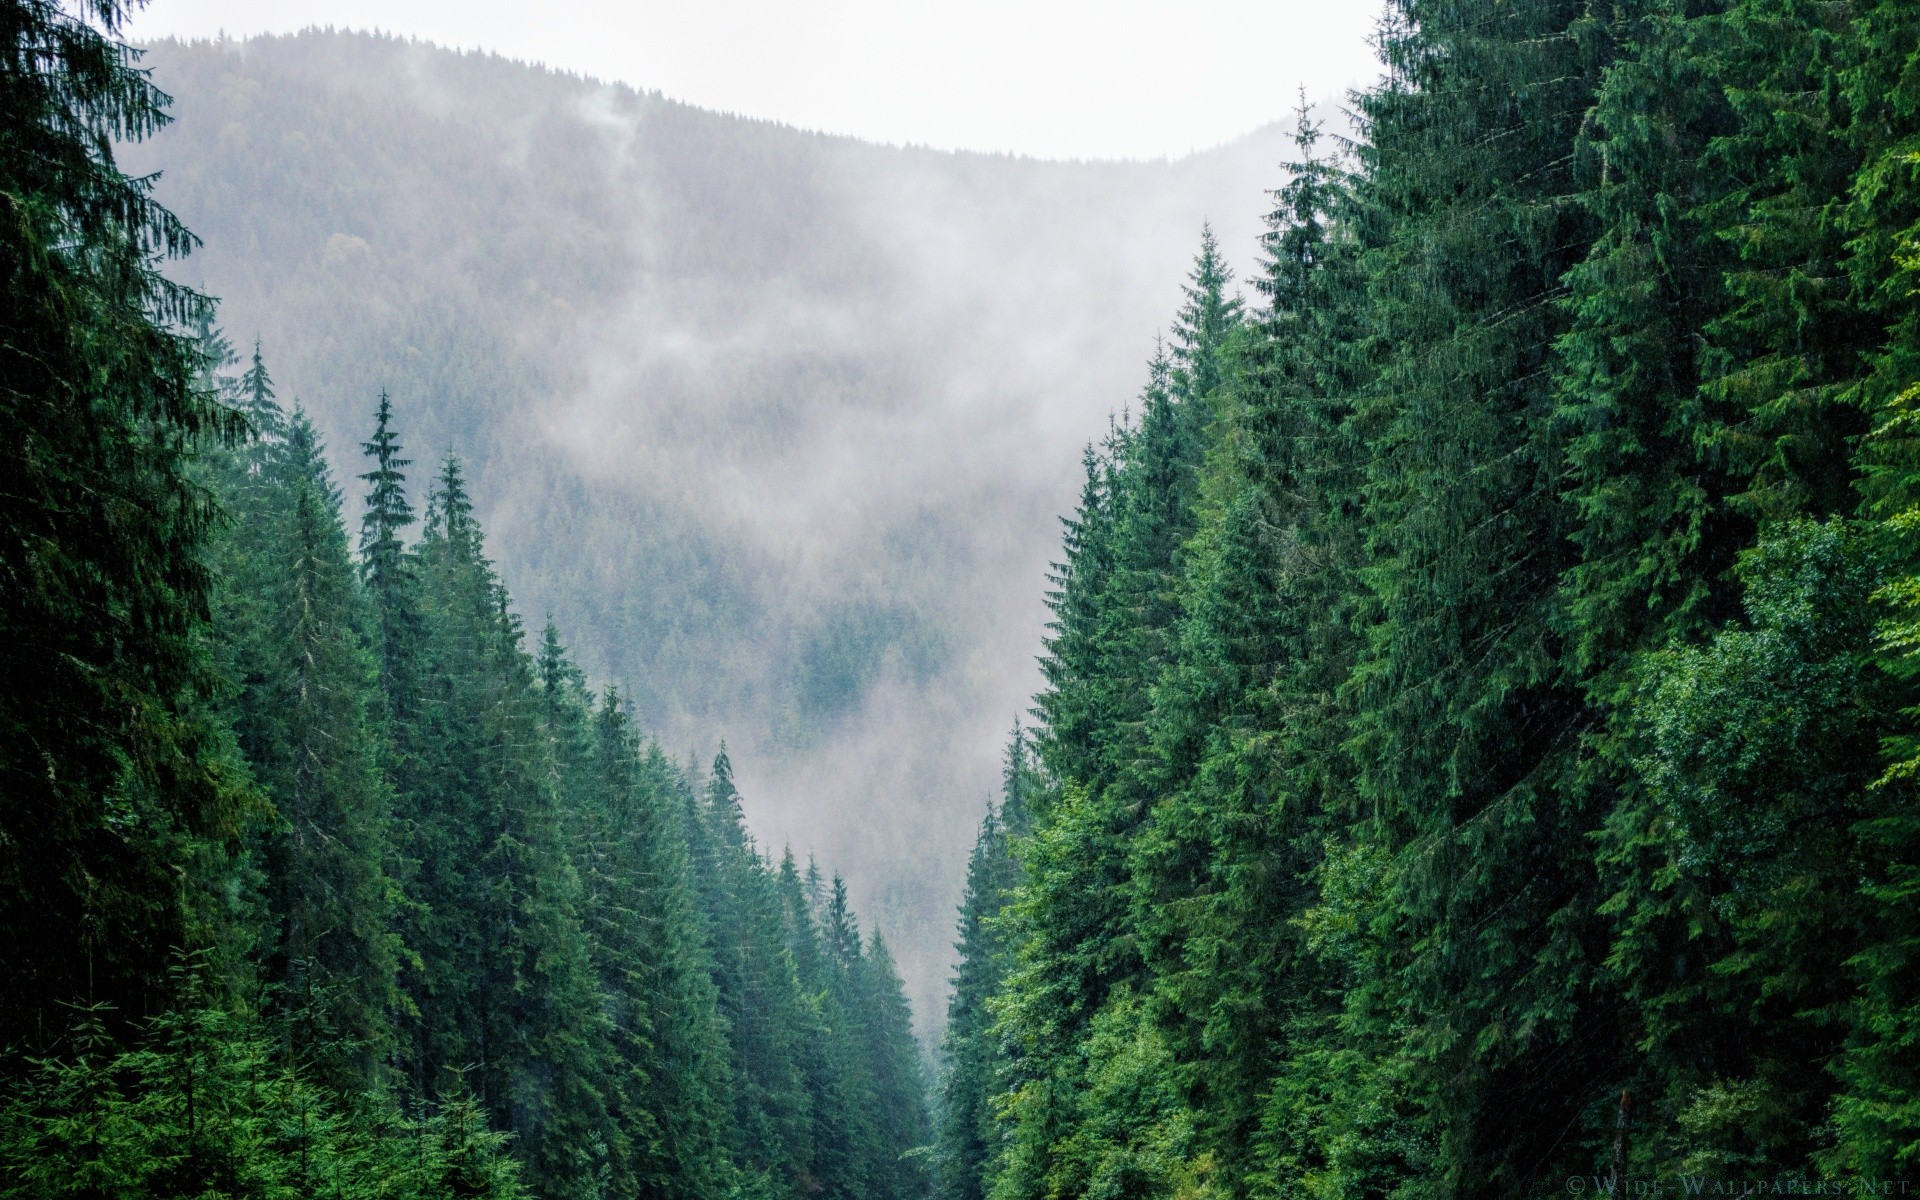 europe wood nature outdoors tree travel conifer mountain landscape evergreen mist fog summer scenic daylight